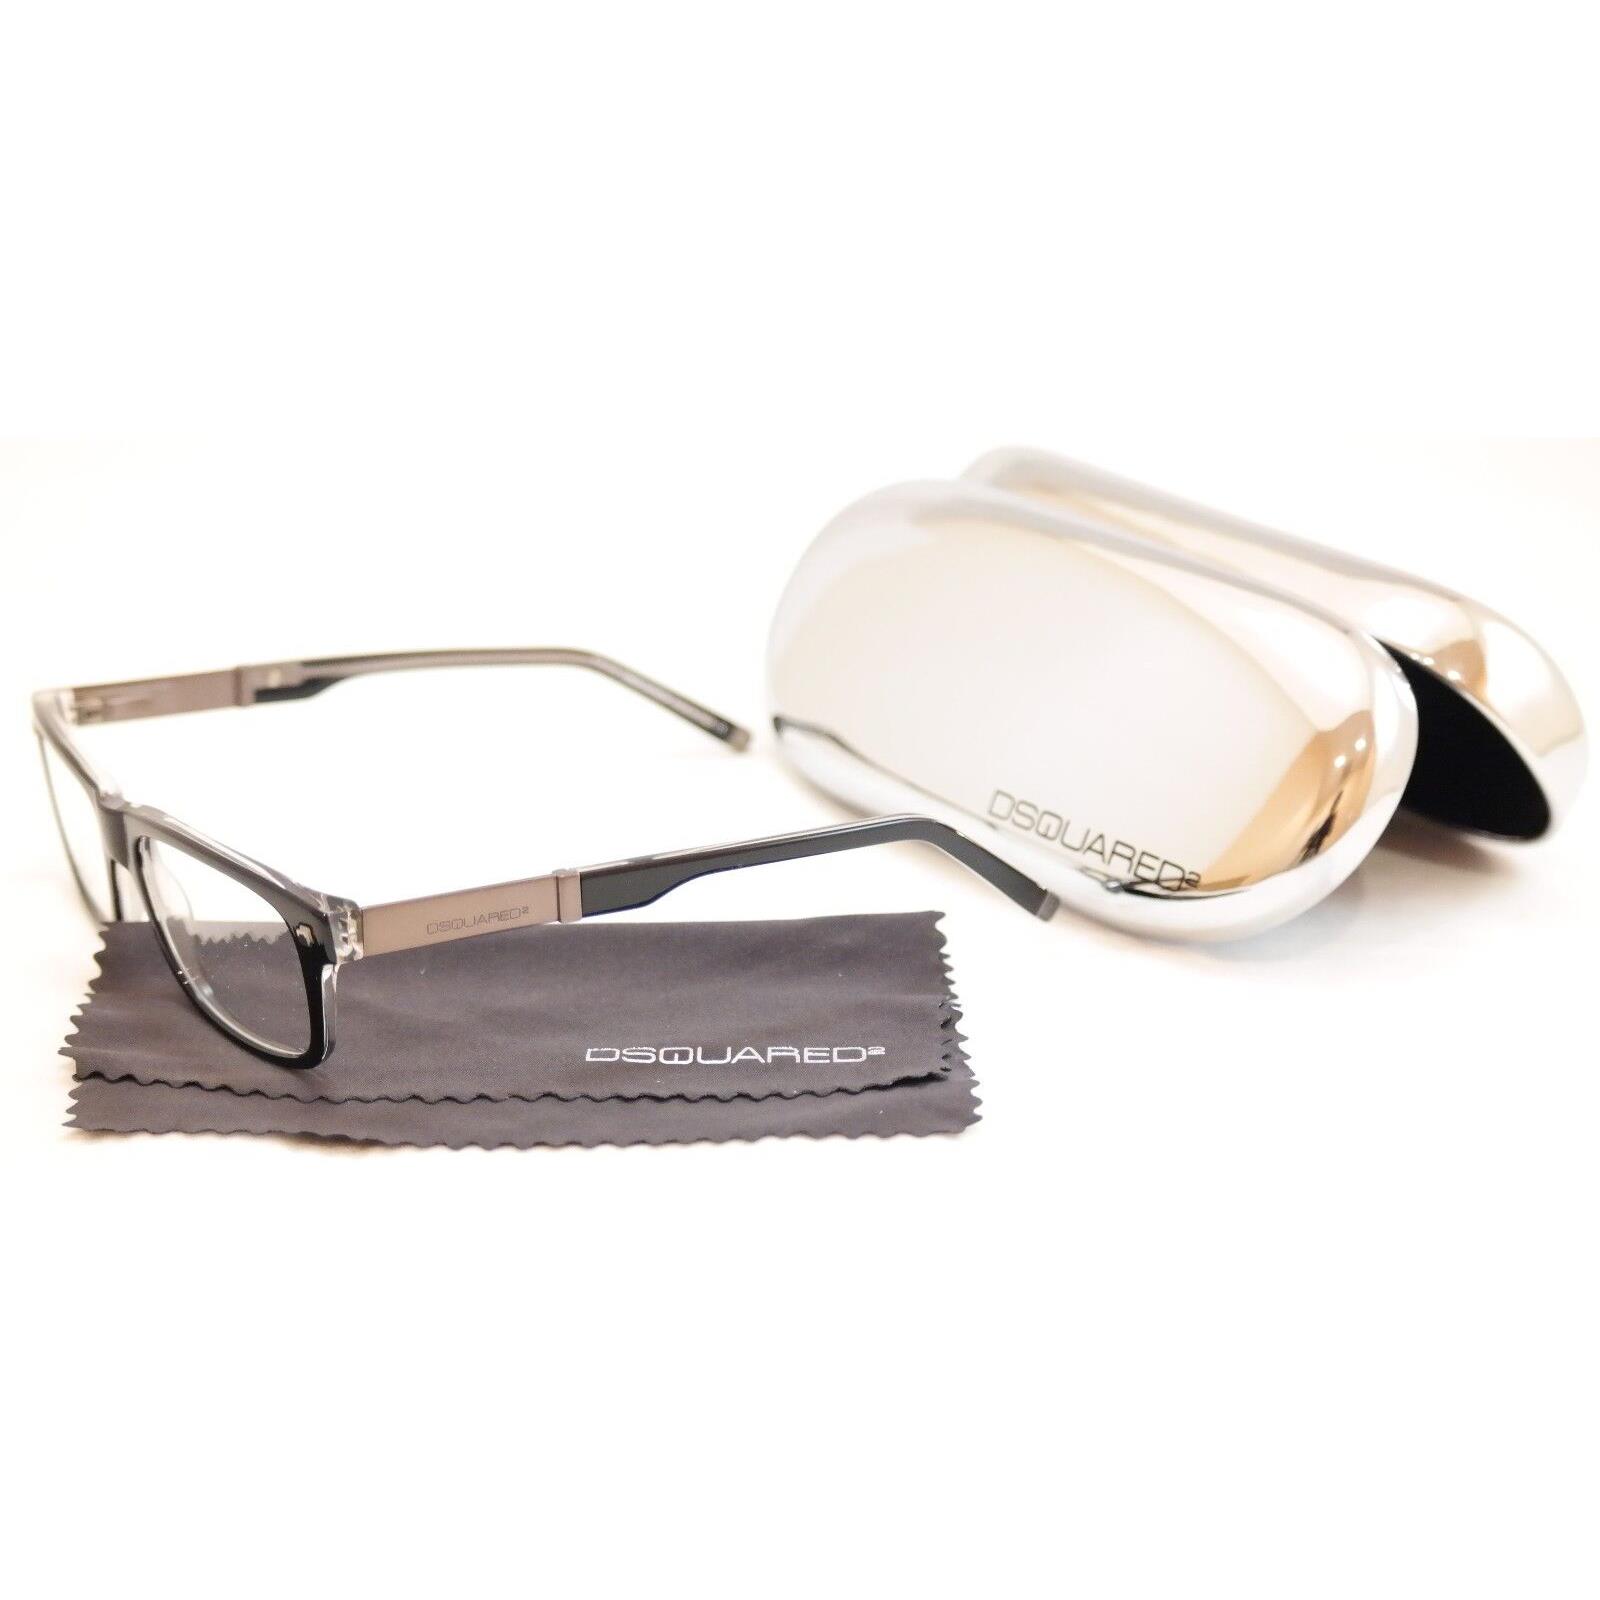 Dsquared2 Eyeglasses Frame DQ5103 003 Black Plastic Metal Italy Made